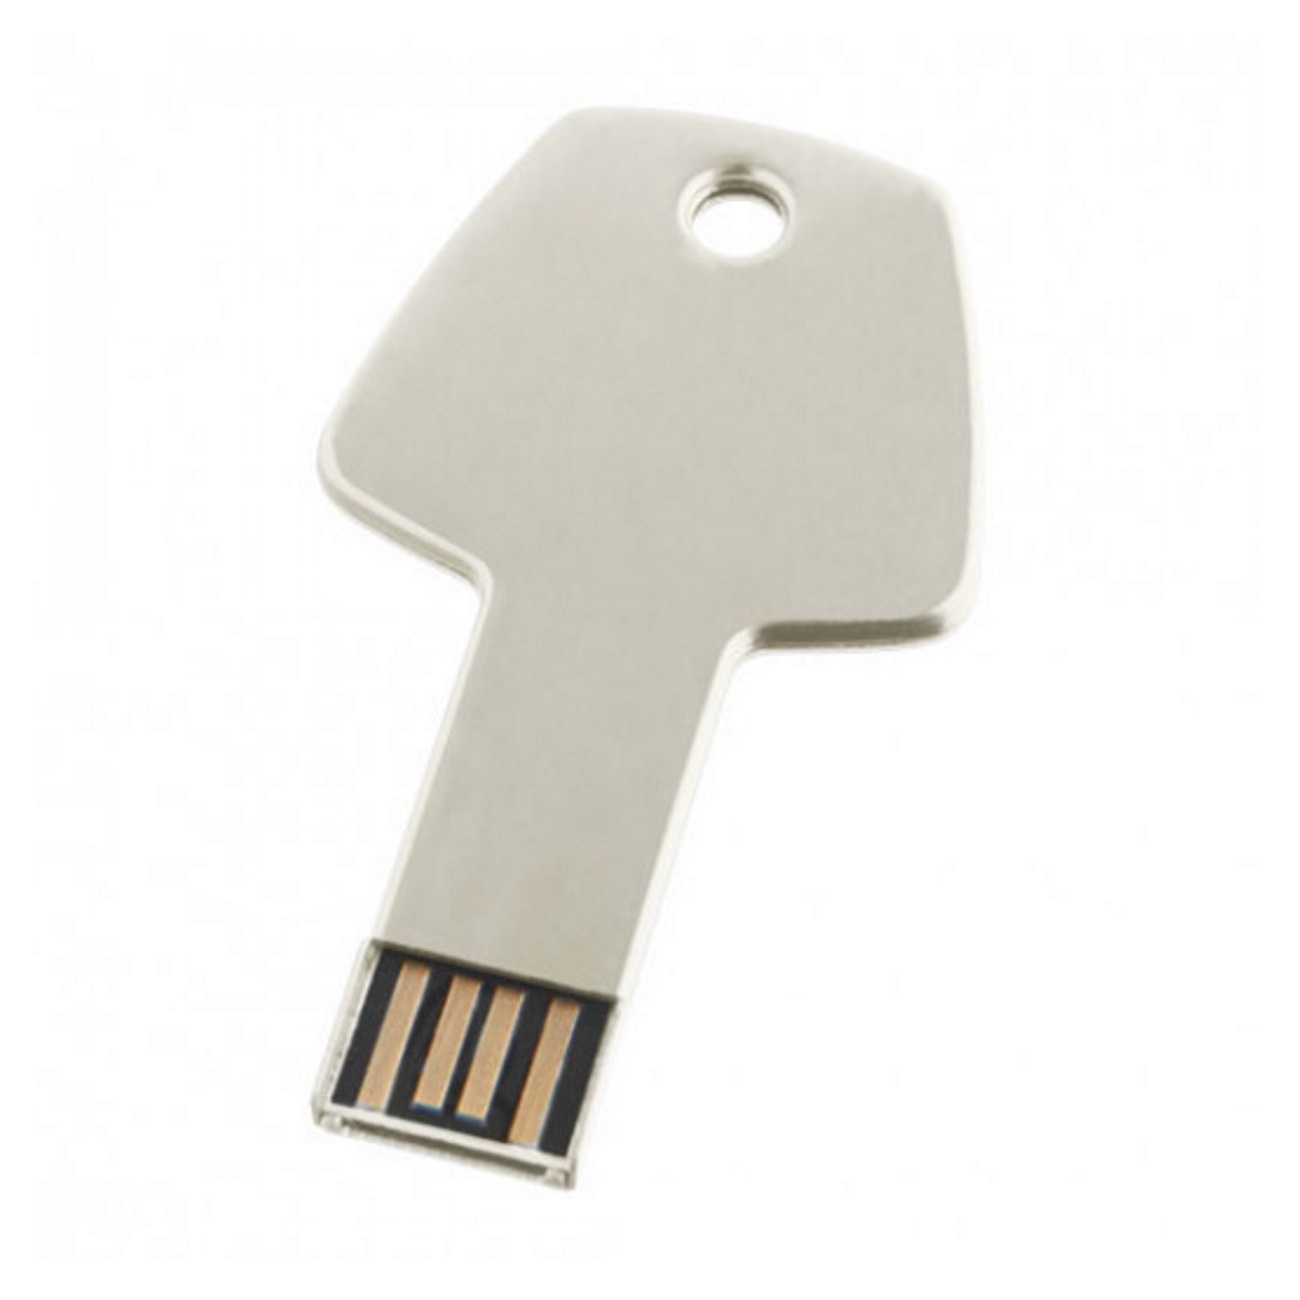 8 USB GB) (Silber, ®Schlüssel GERMANY USB-Stick Key